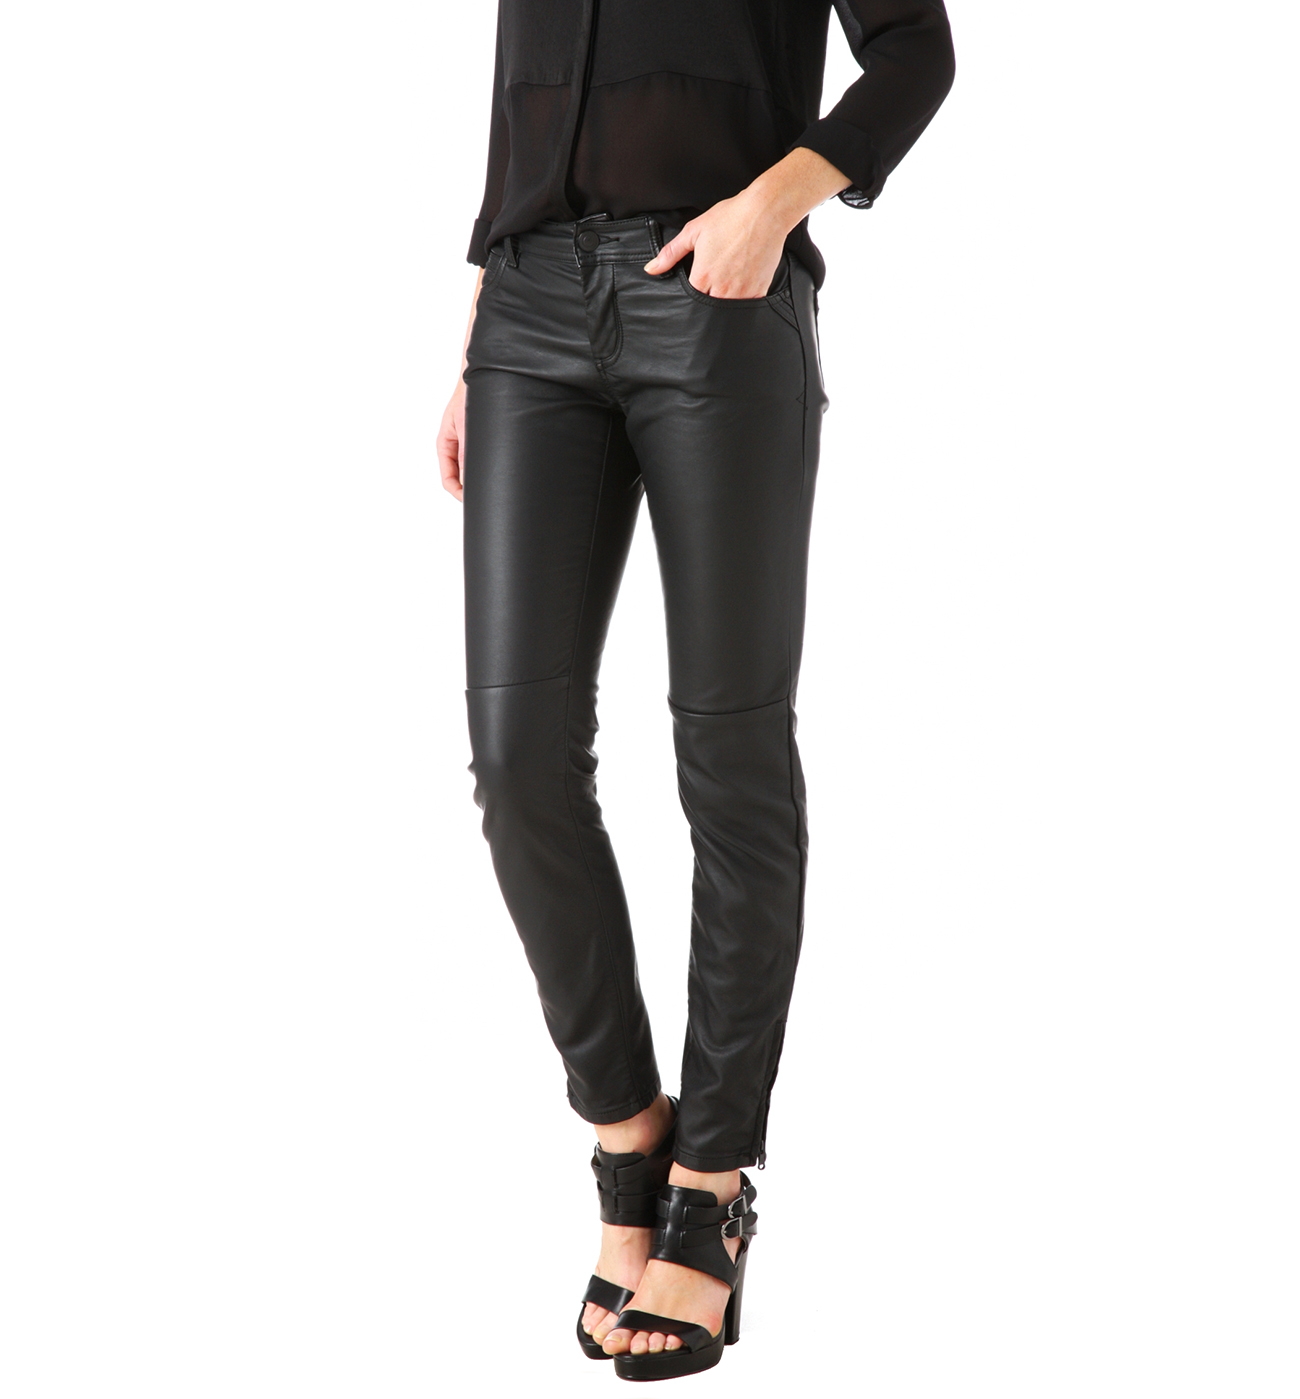 Pantalon en simili cuir Femme Noir - Pantalon Promod